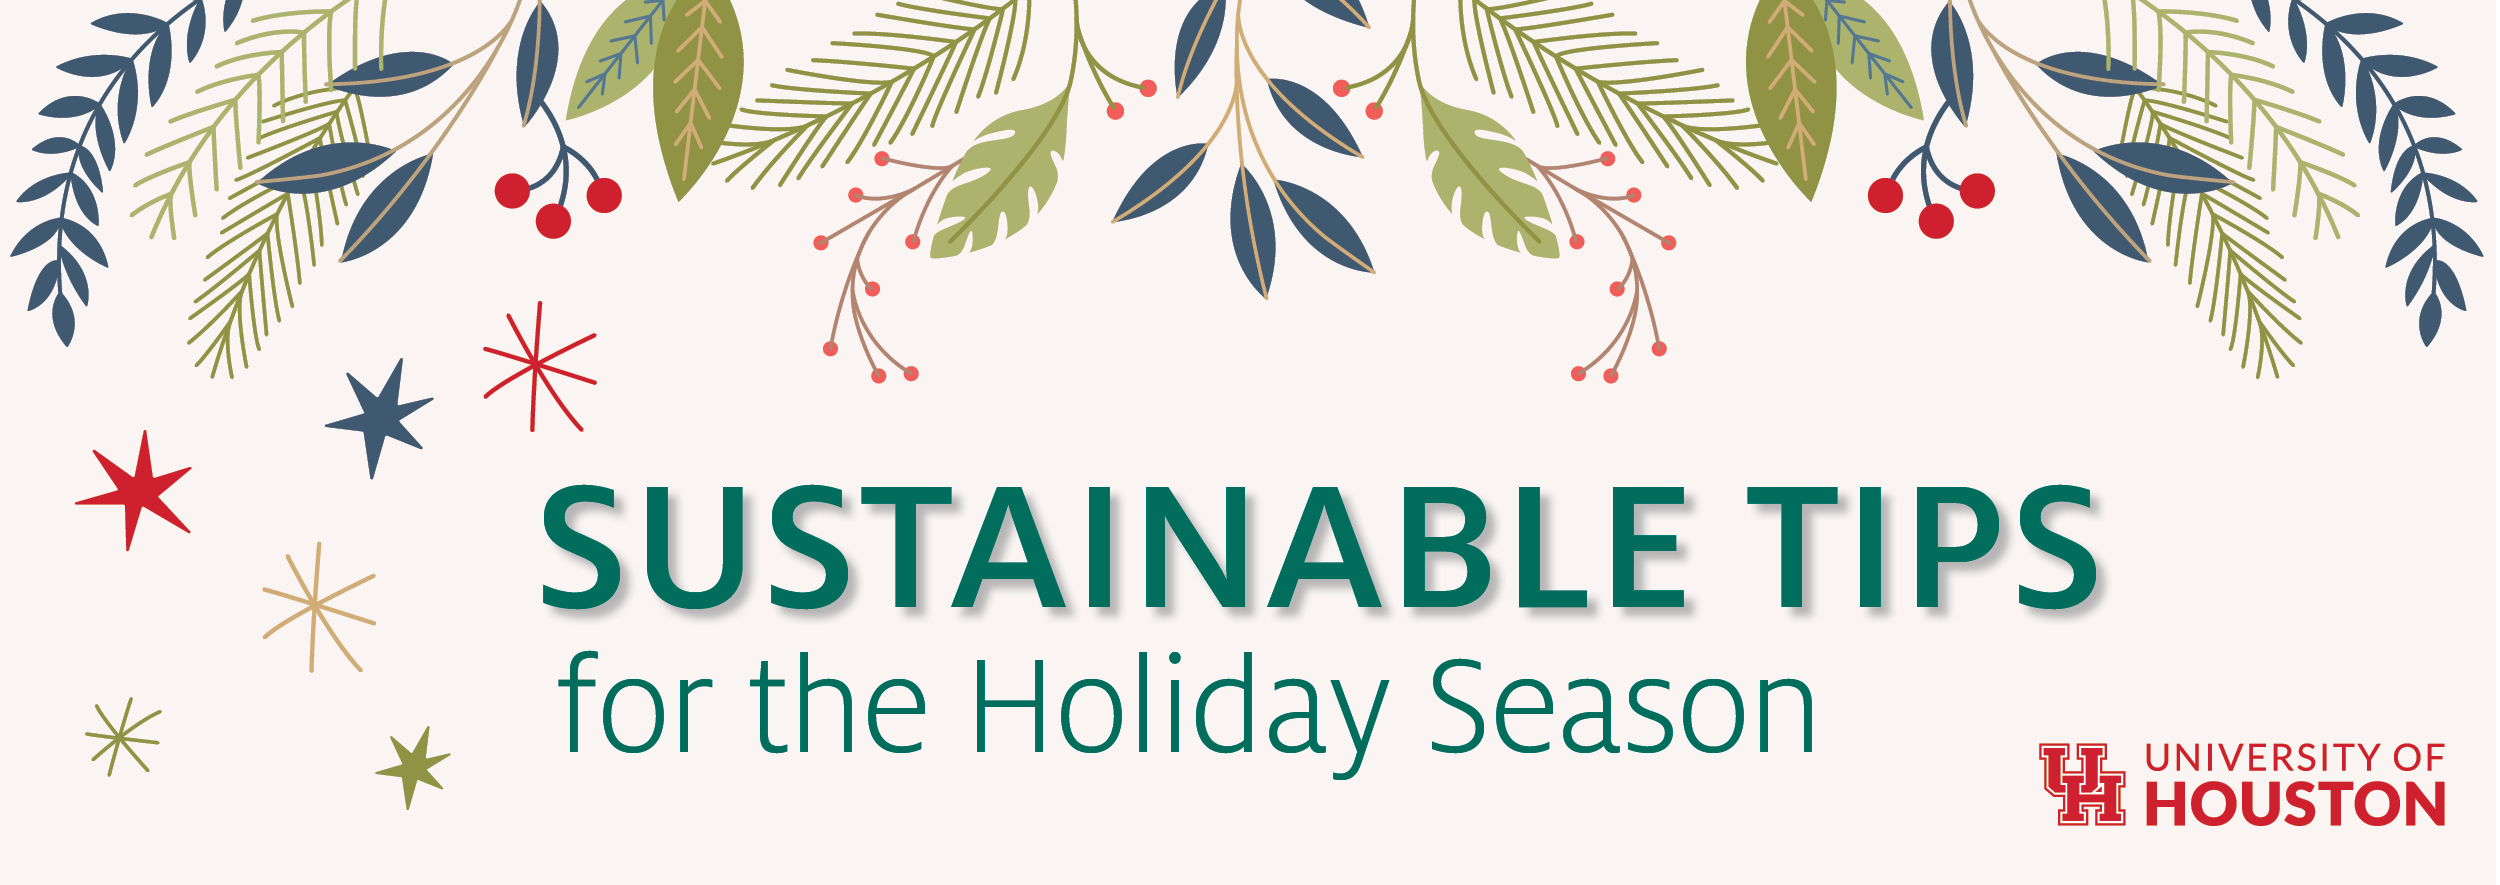 sustainability-holiday-banner.jpg